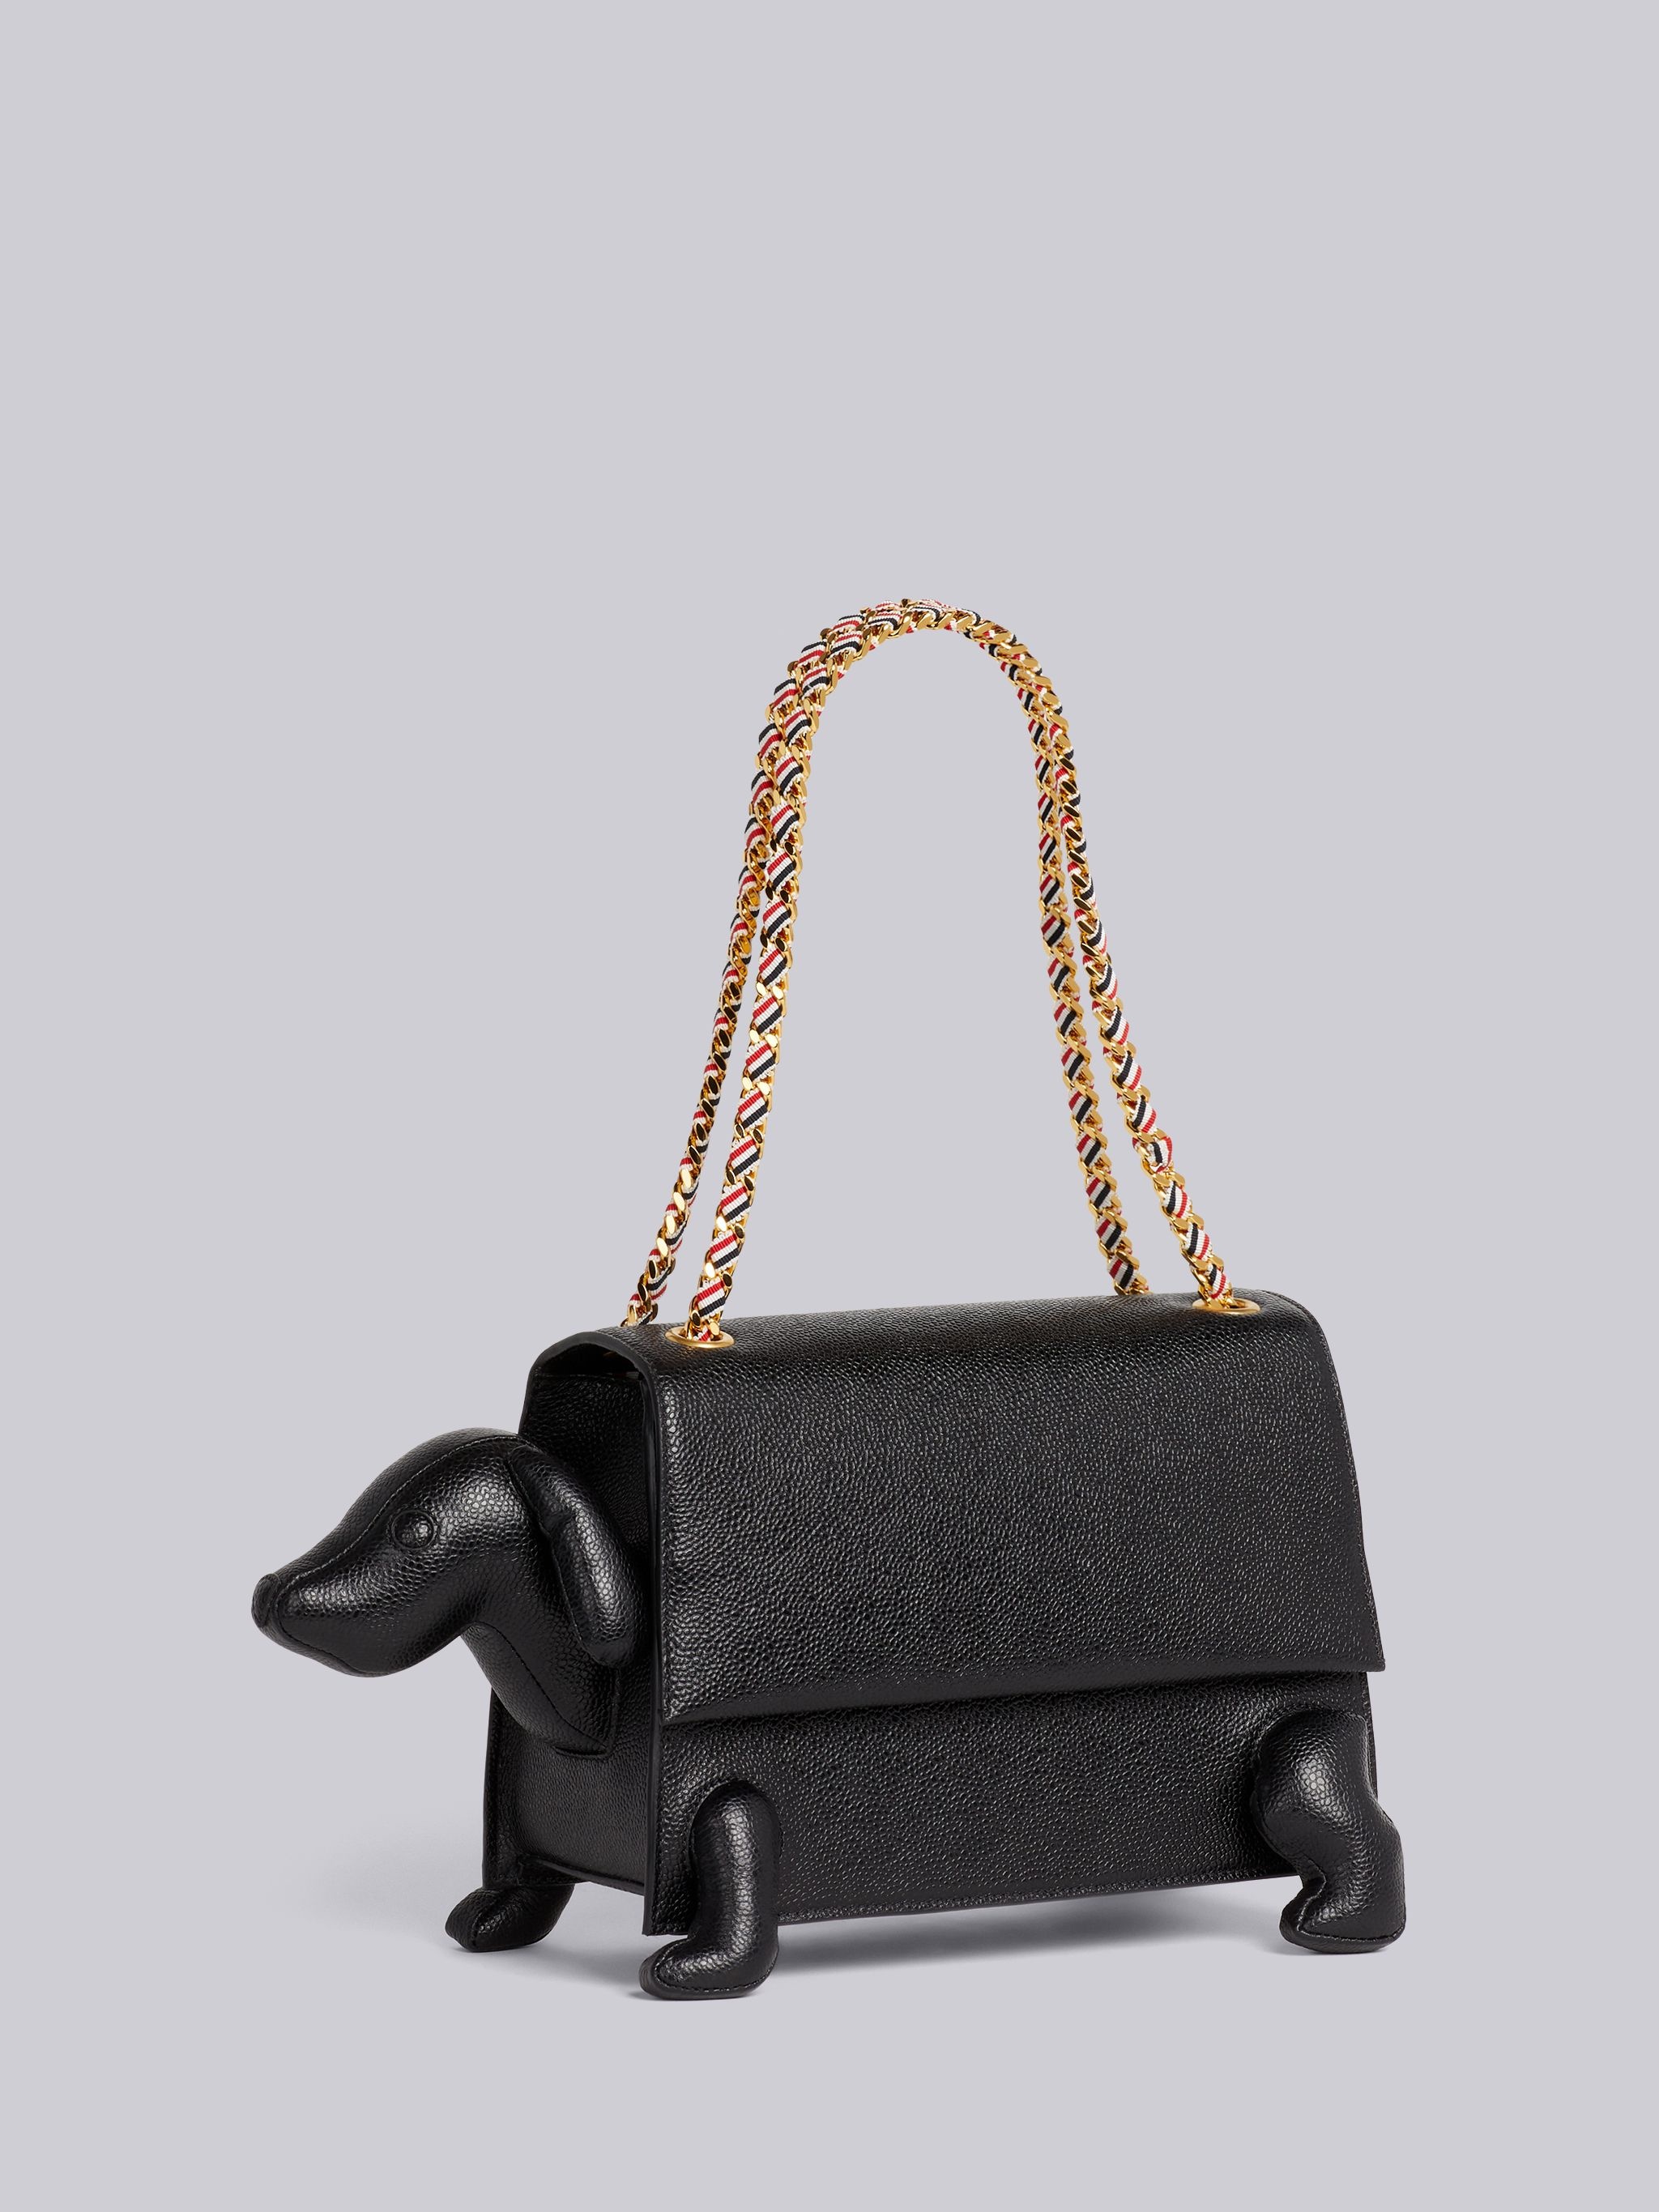 Black Pebble Grain Leather Stripe Grosgrain Chain Hector Flap Bag - 3